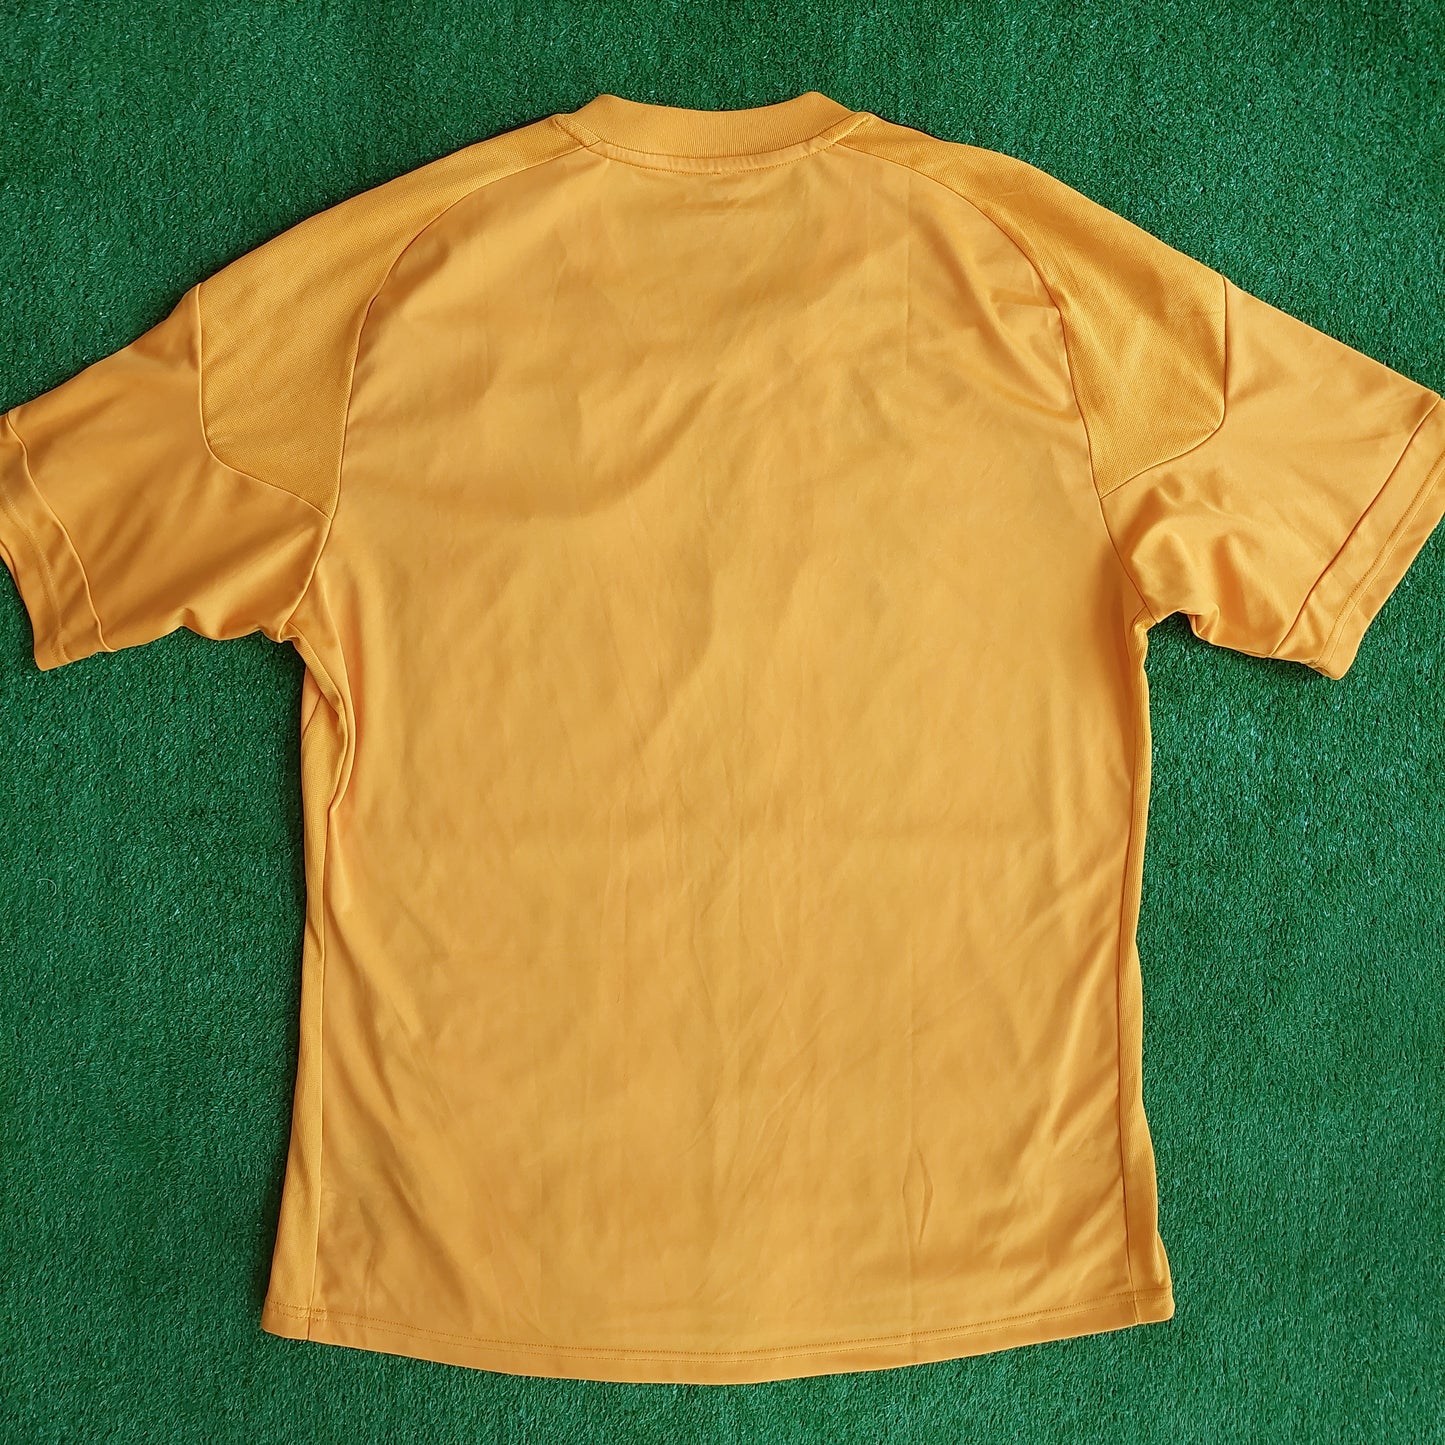 Hull City 2010/11 Home Shirt (Very Good) - Size XL